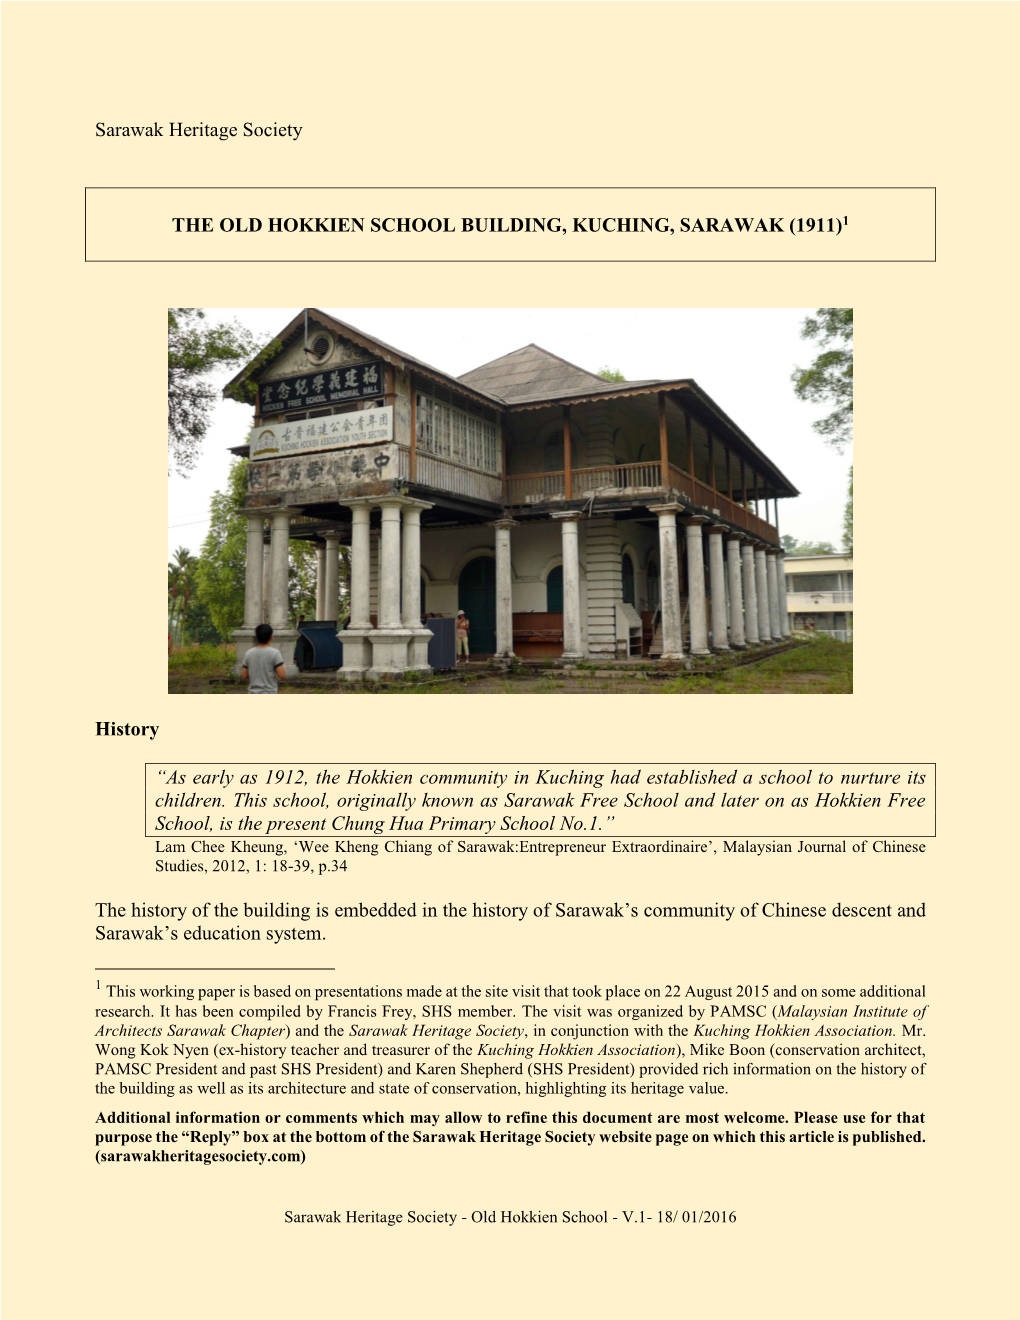 Sarawak Heritage Society the OLD HOKKIEN SCHOOL BUILDING